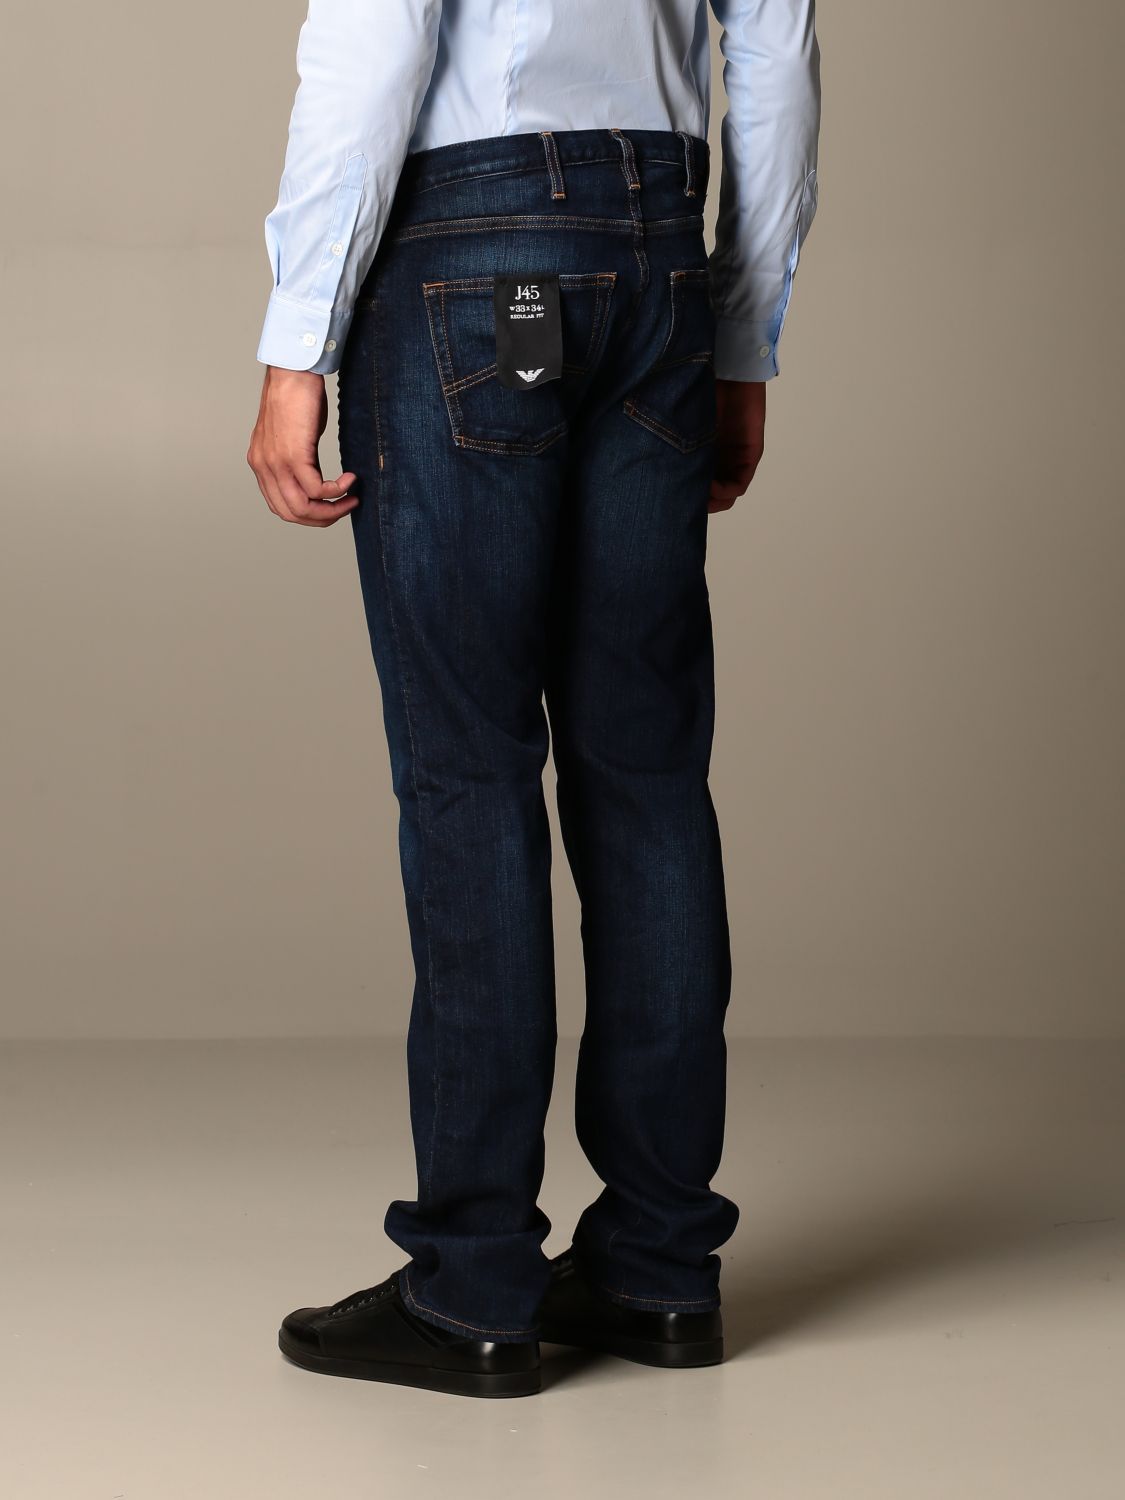 Emporio Armani Outlet: Regular jeans - Denim | Emporio Armani jeans 8N1J45 1V0LZ online on GIGLIO.COM